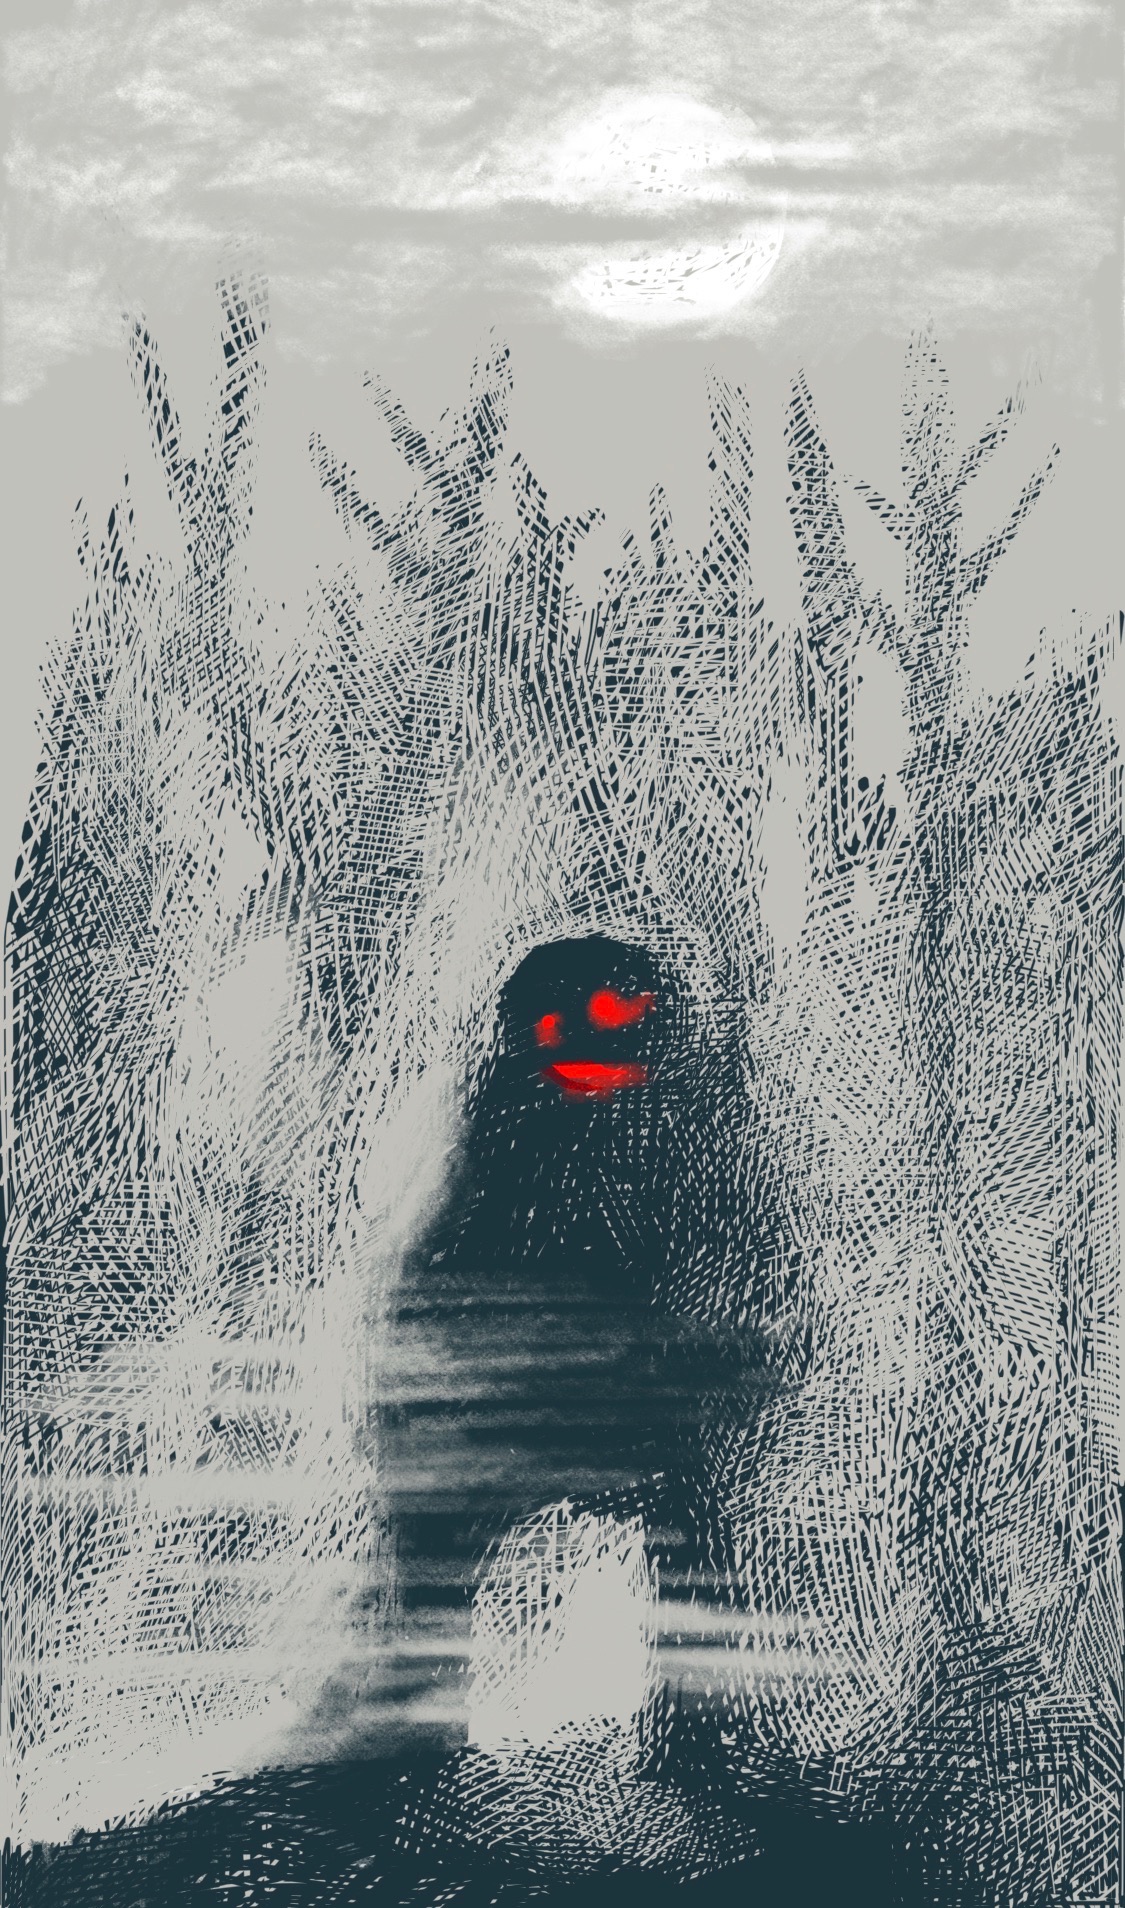 A troll emerges from a foggy wood.